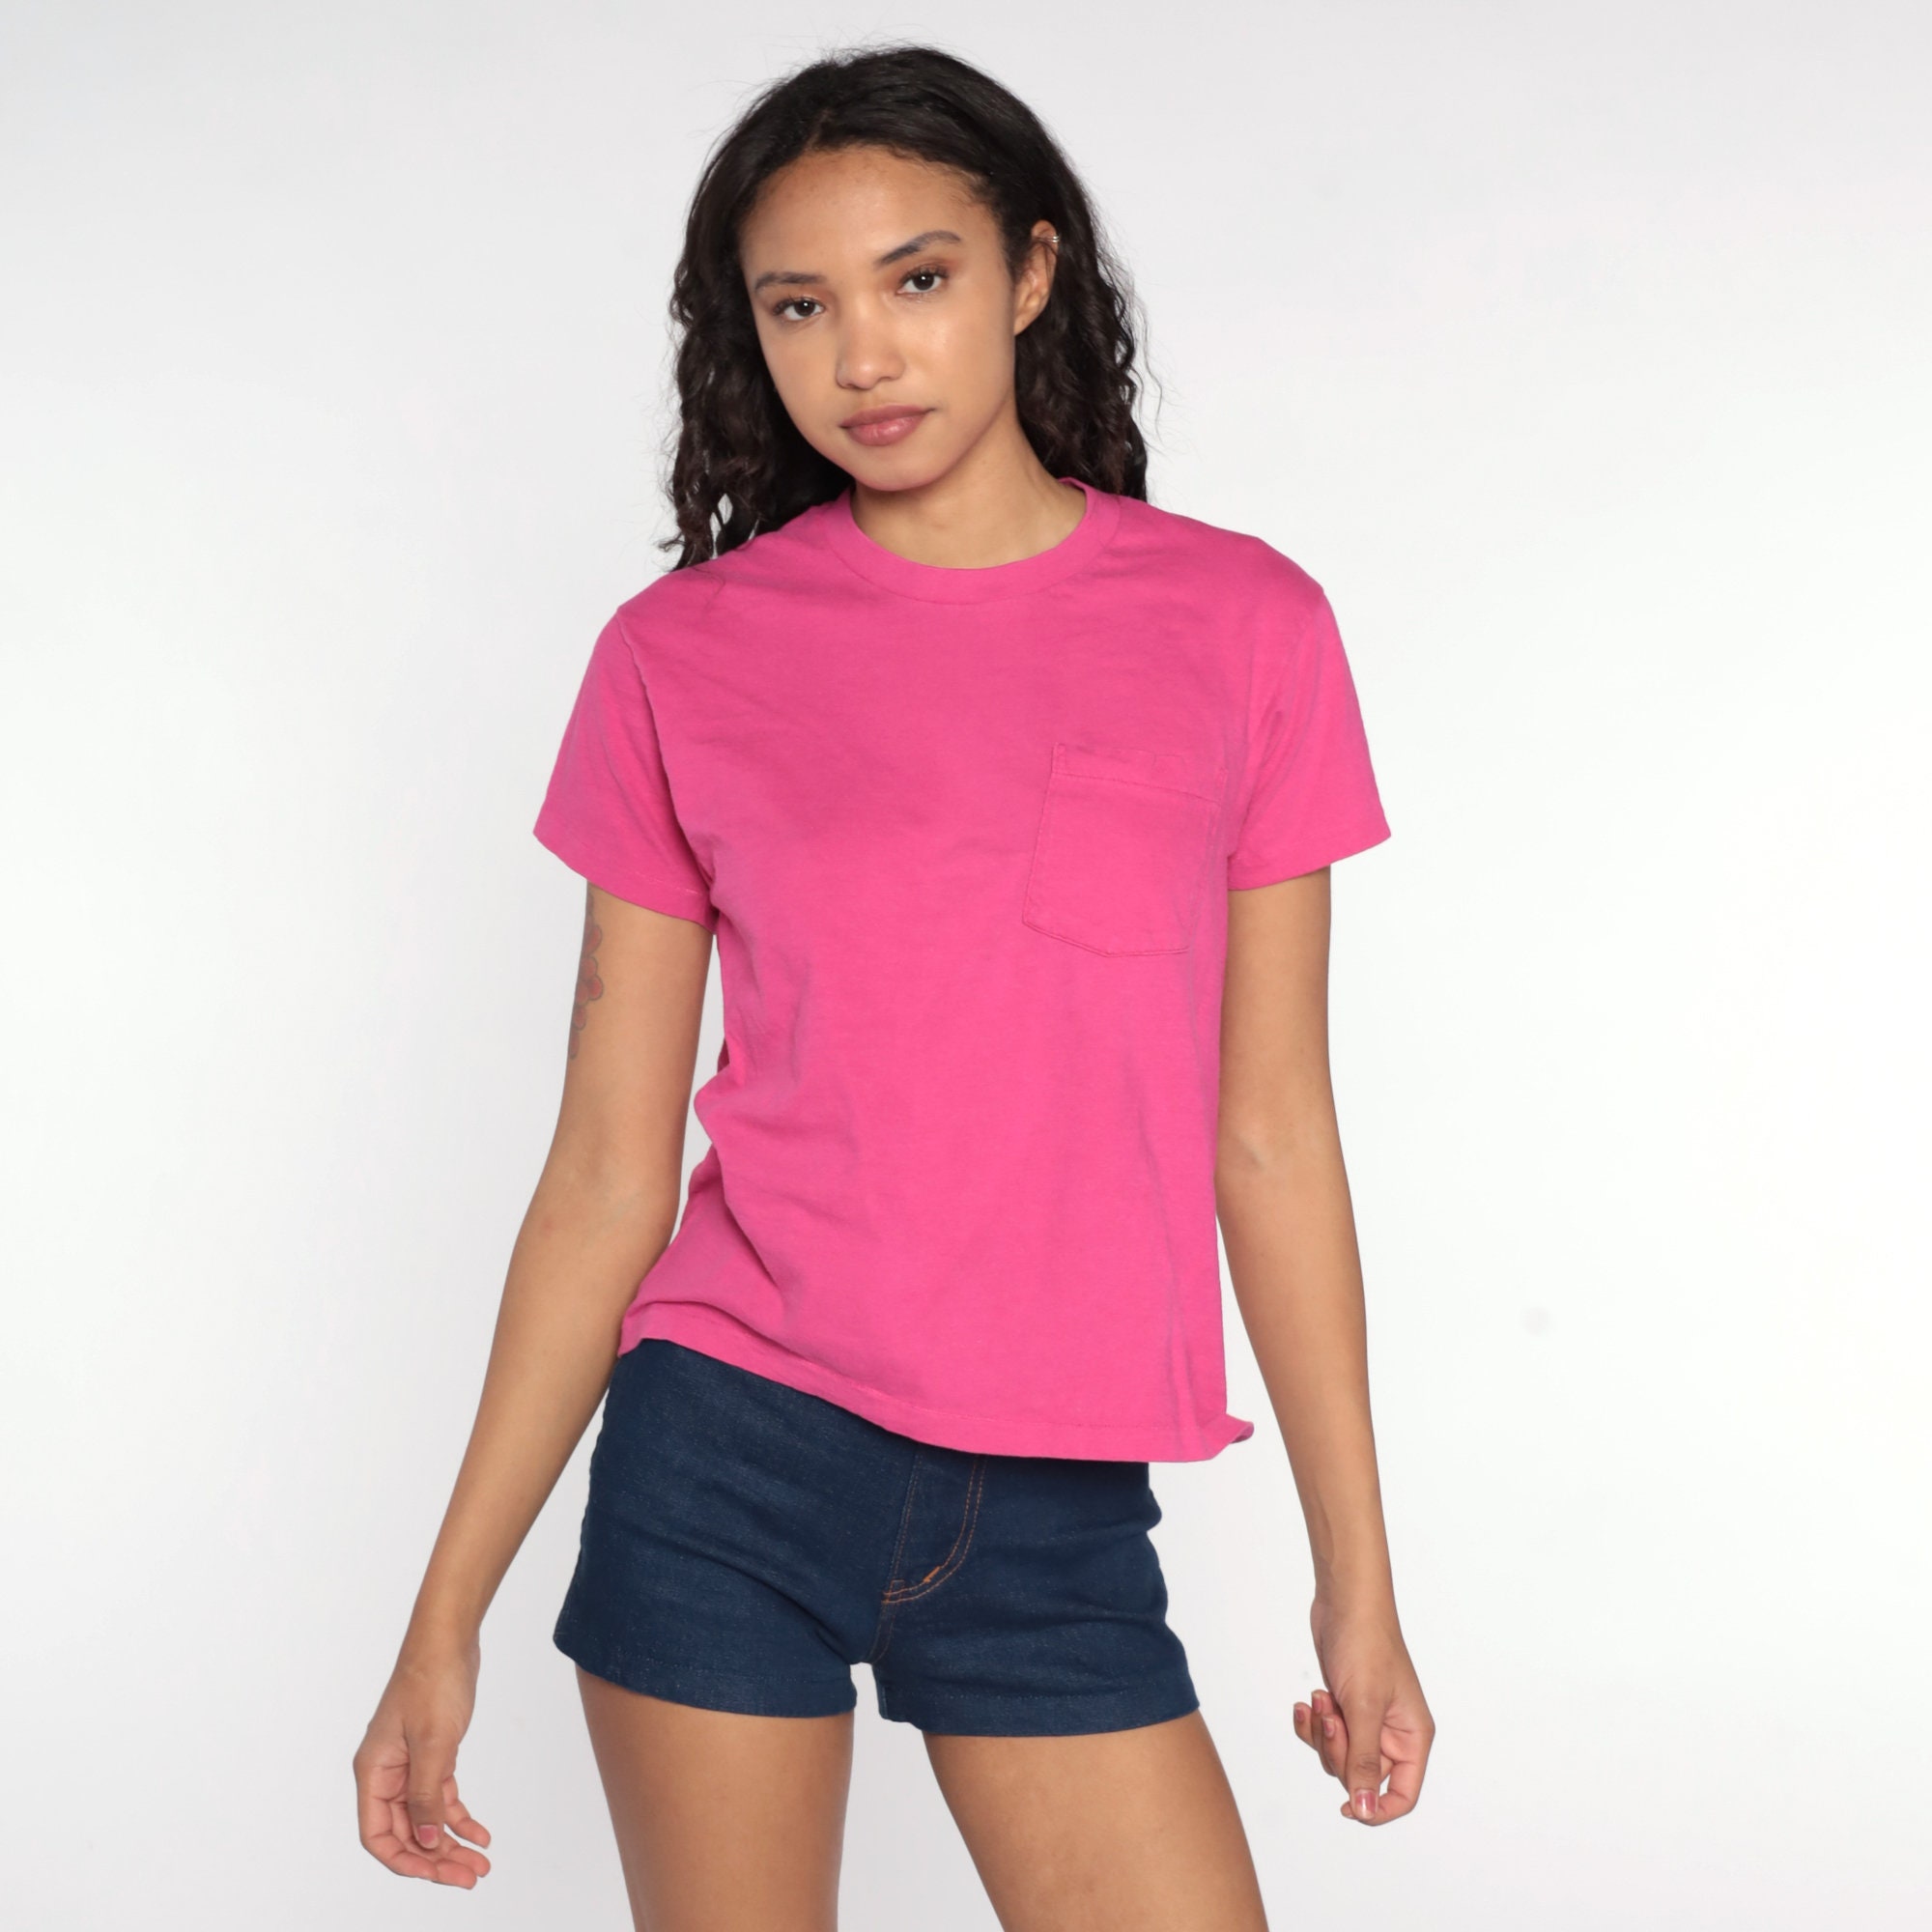 80s Pink And Green Tee Shirt Clips Forum Novelties Inc 